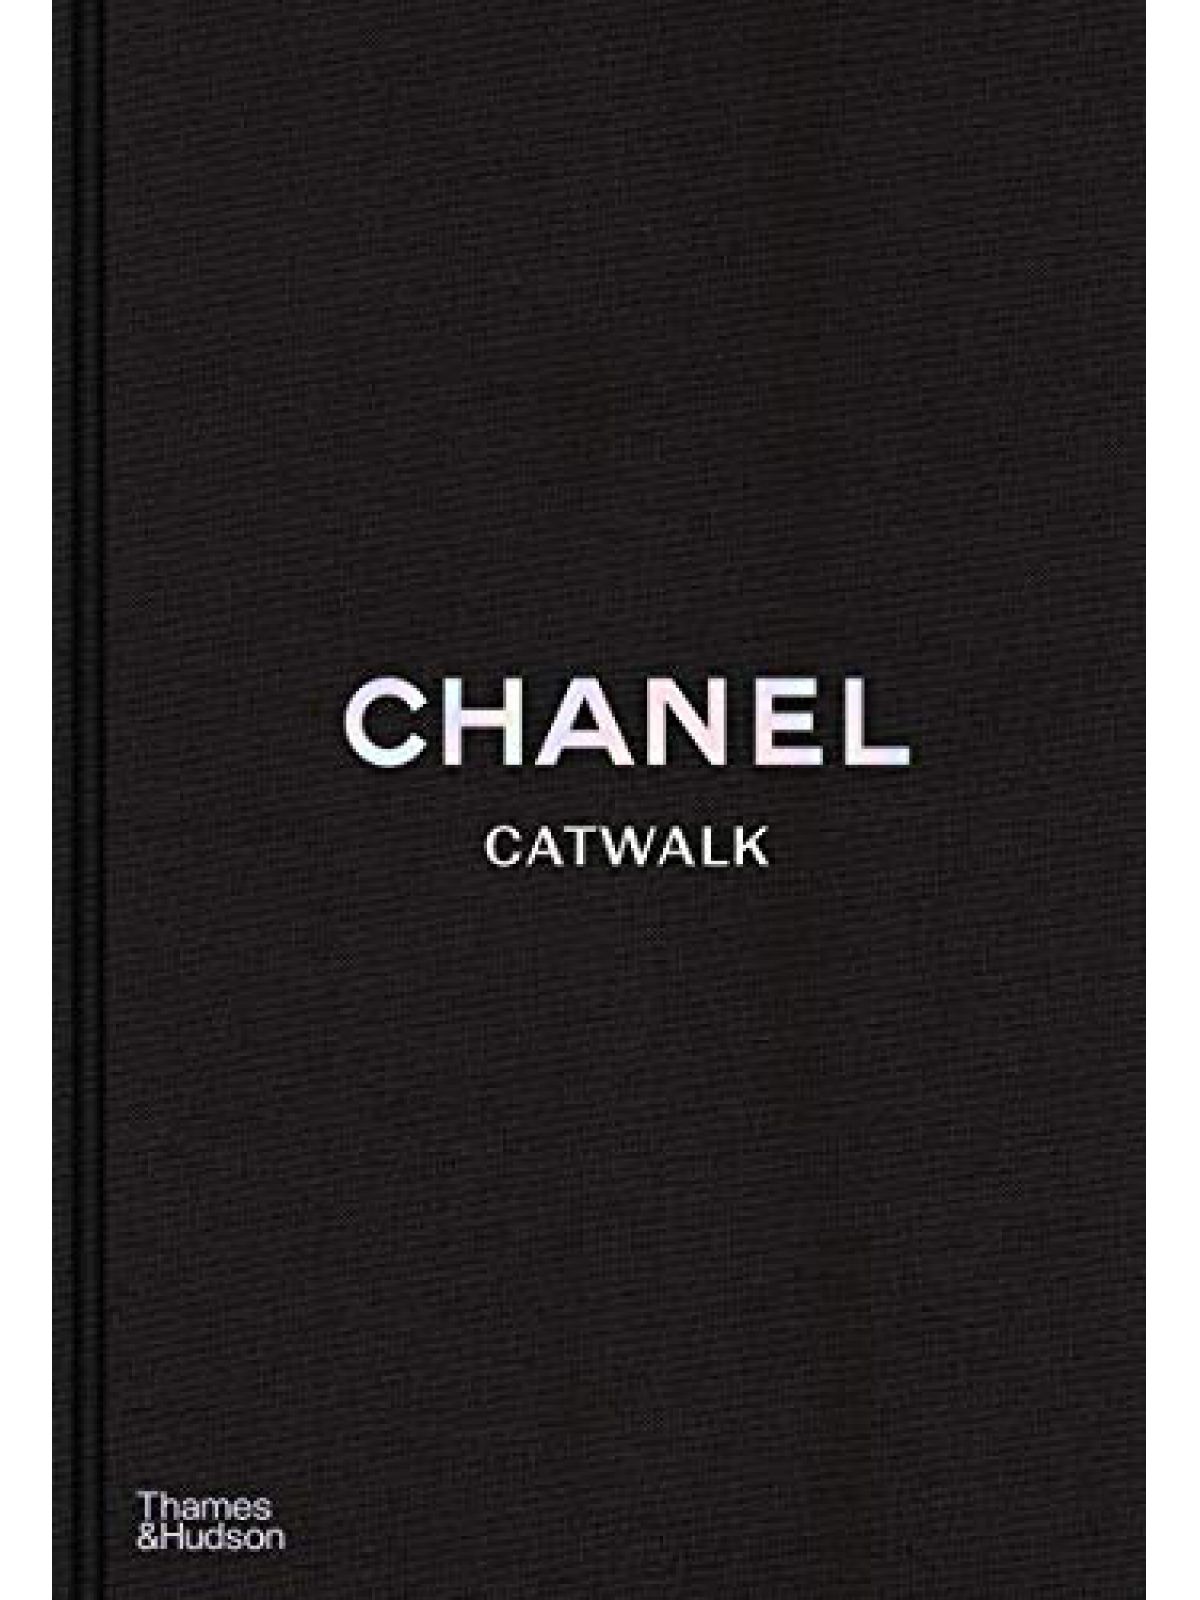 CHANEL CATWALK N/E  Купить Книгу на Английском